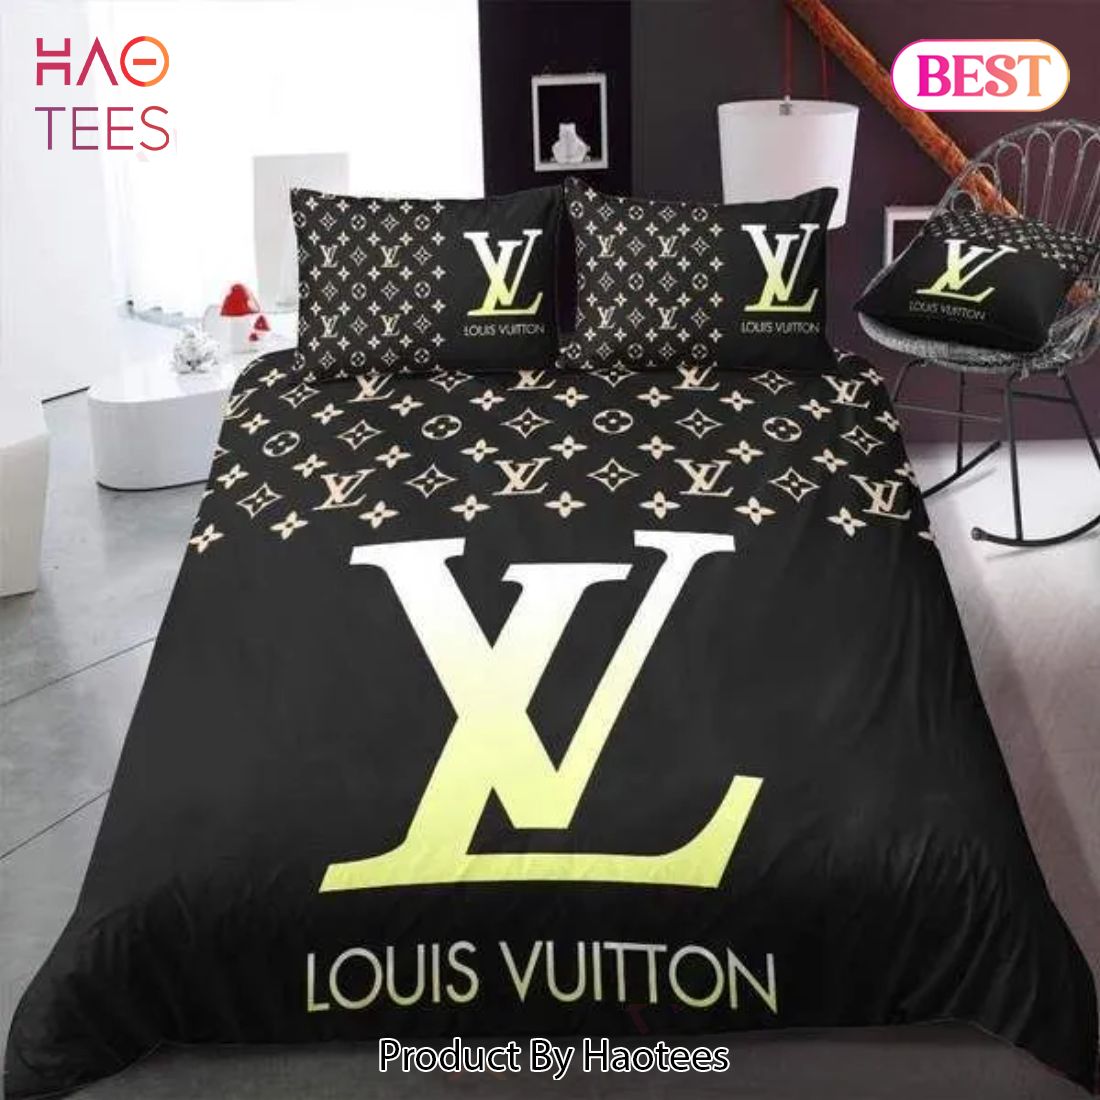 SALE] Louis Vuitton Black Luxury Brand High-End Bedding Set LV Home Decor